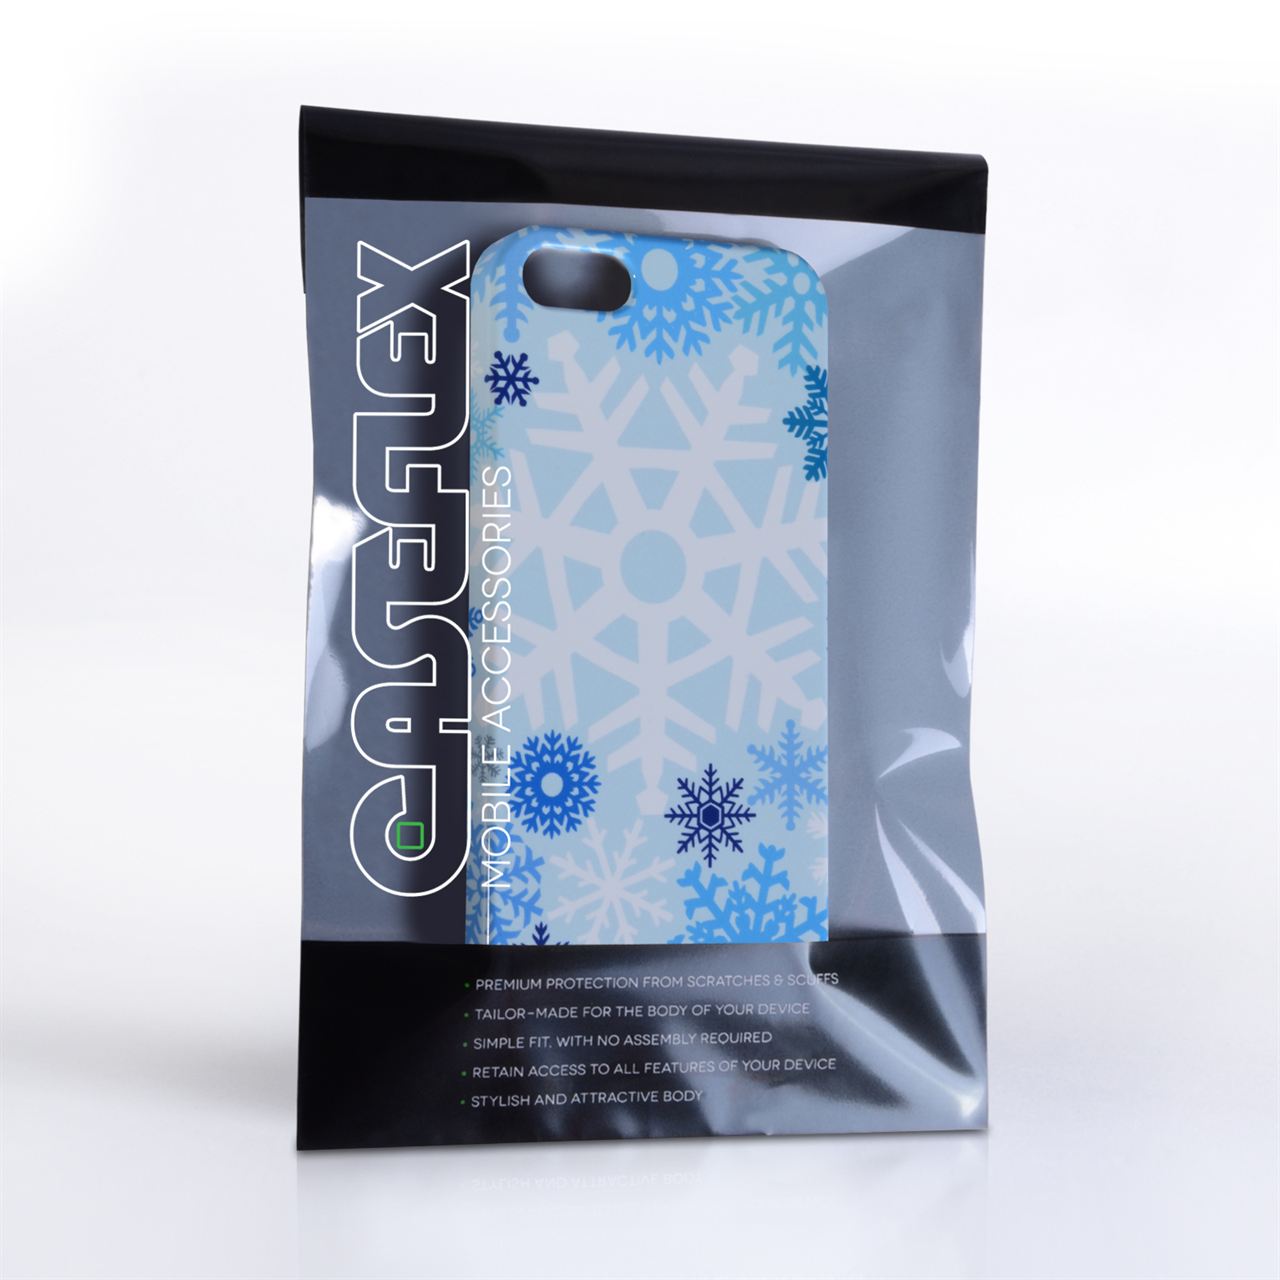 Caseflex iPhone 5 / 5S Winter Christmas Snowflake Cover – Blue